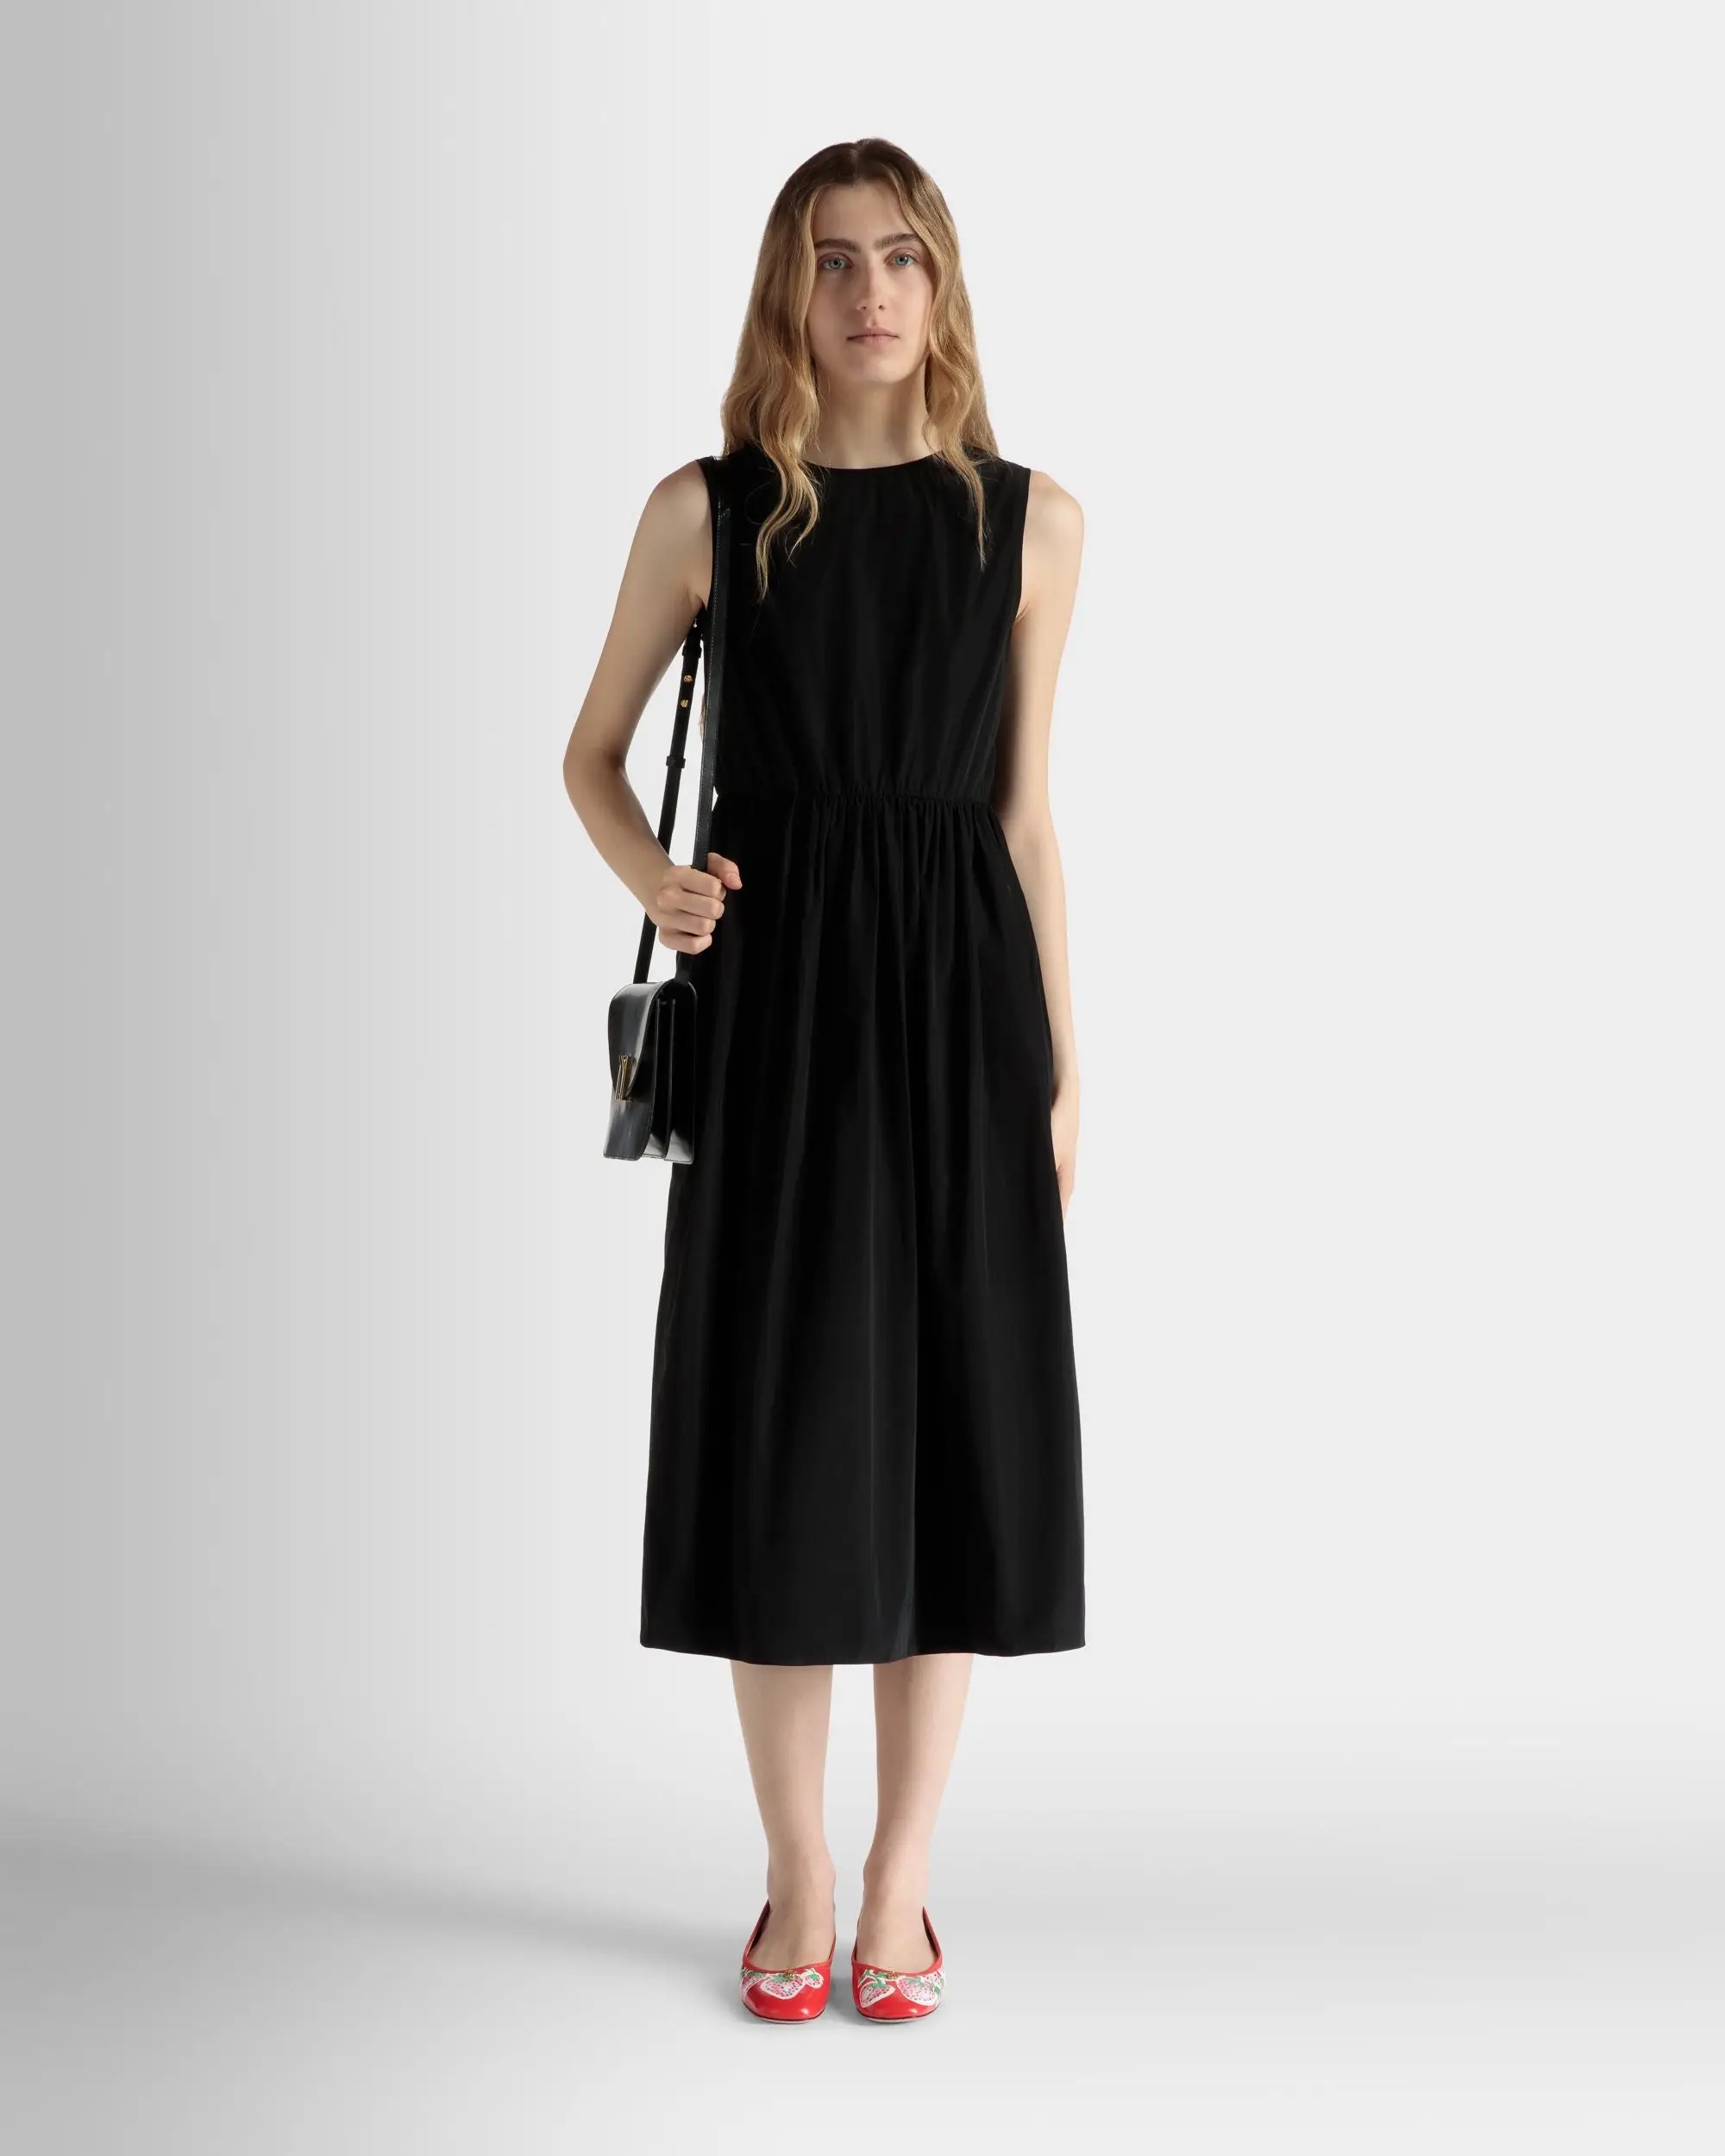 Sleeveless Midi Dress in Black Technical Duchesse